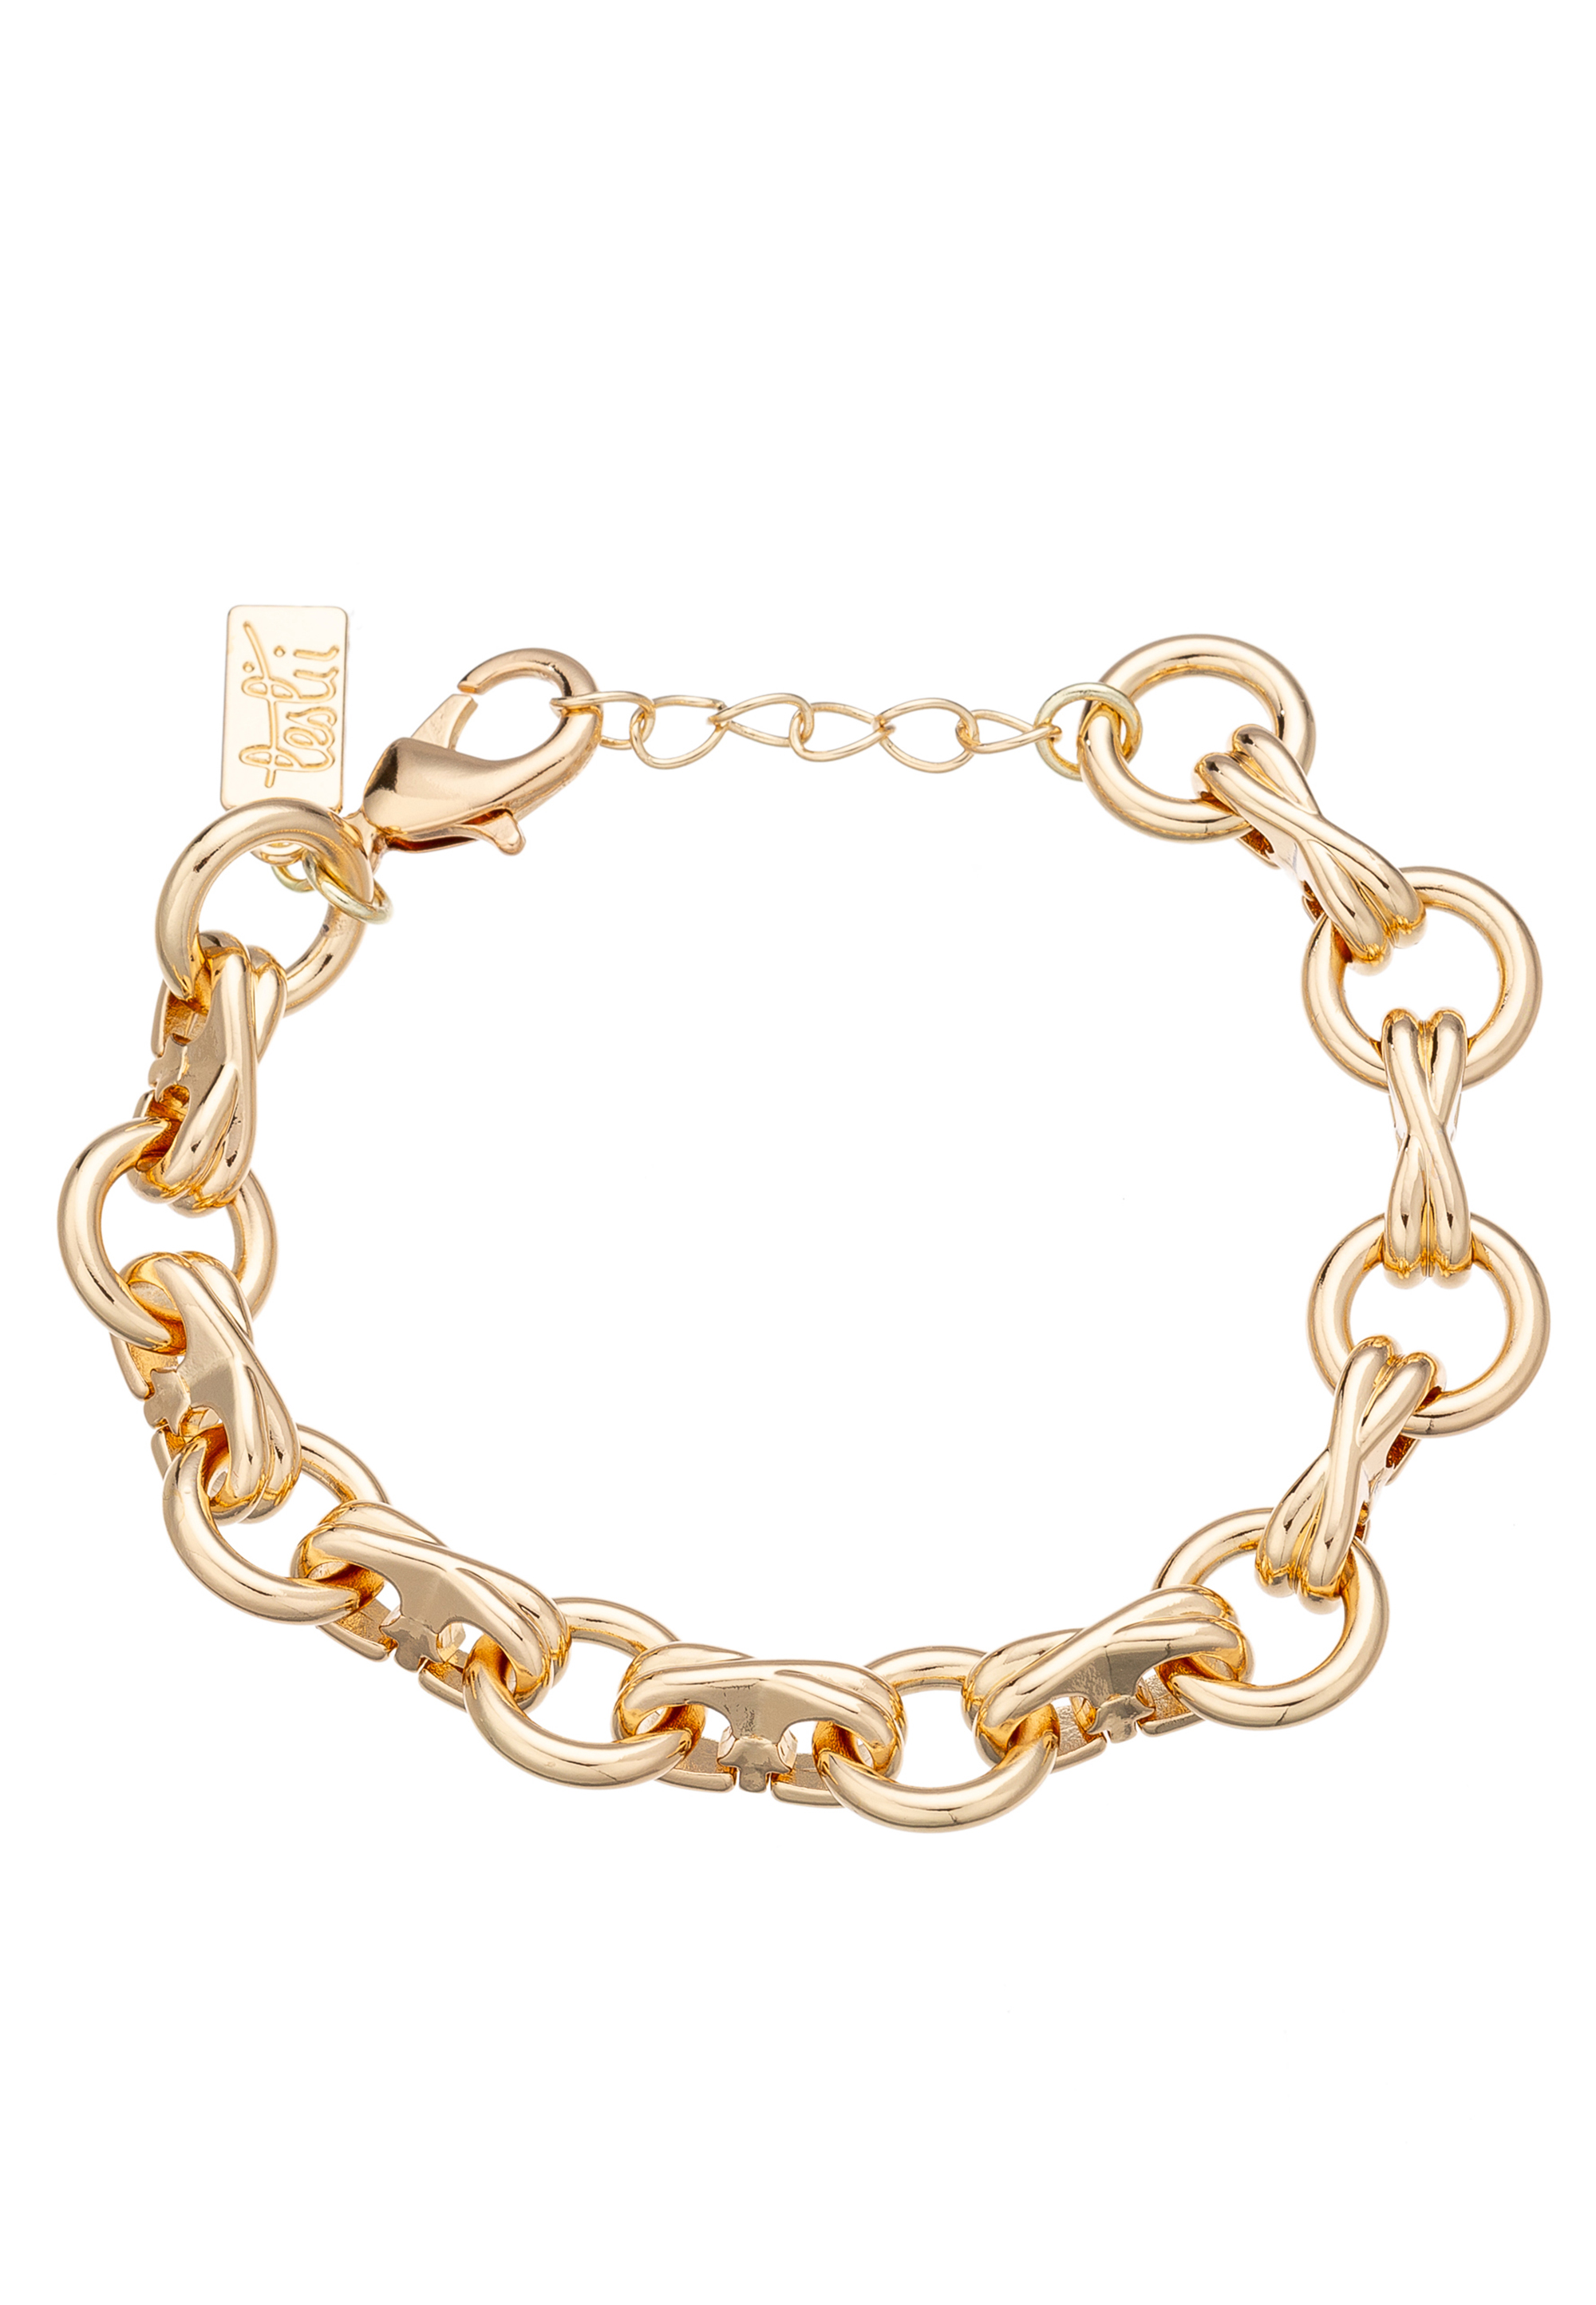 Leslii Statement | Leslii Online Armband Gold in Shop mit Gliedern